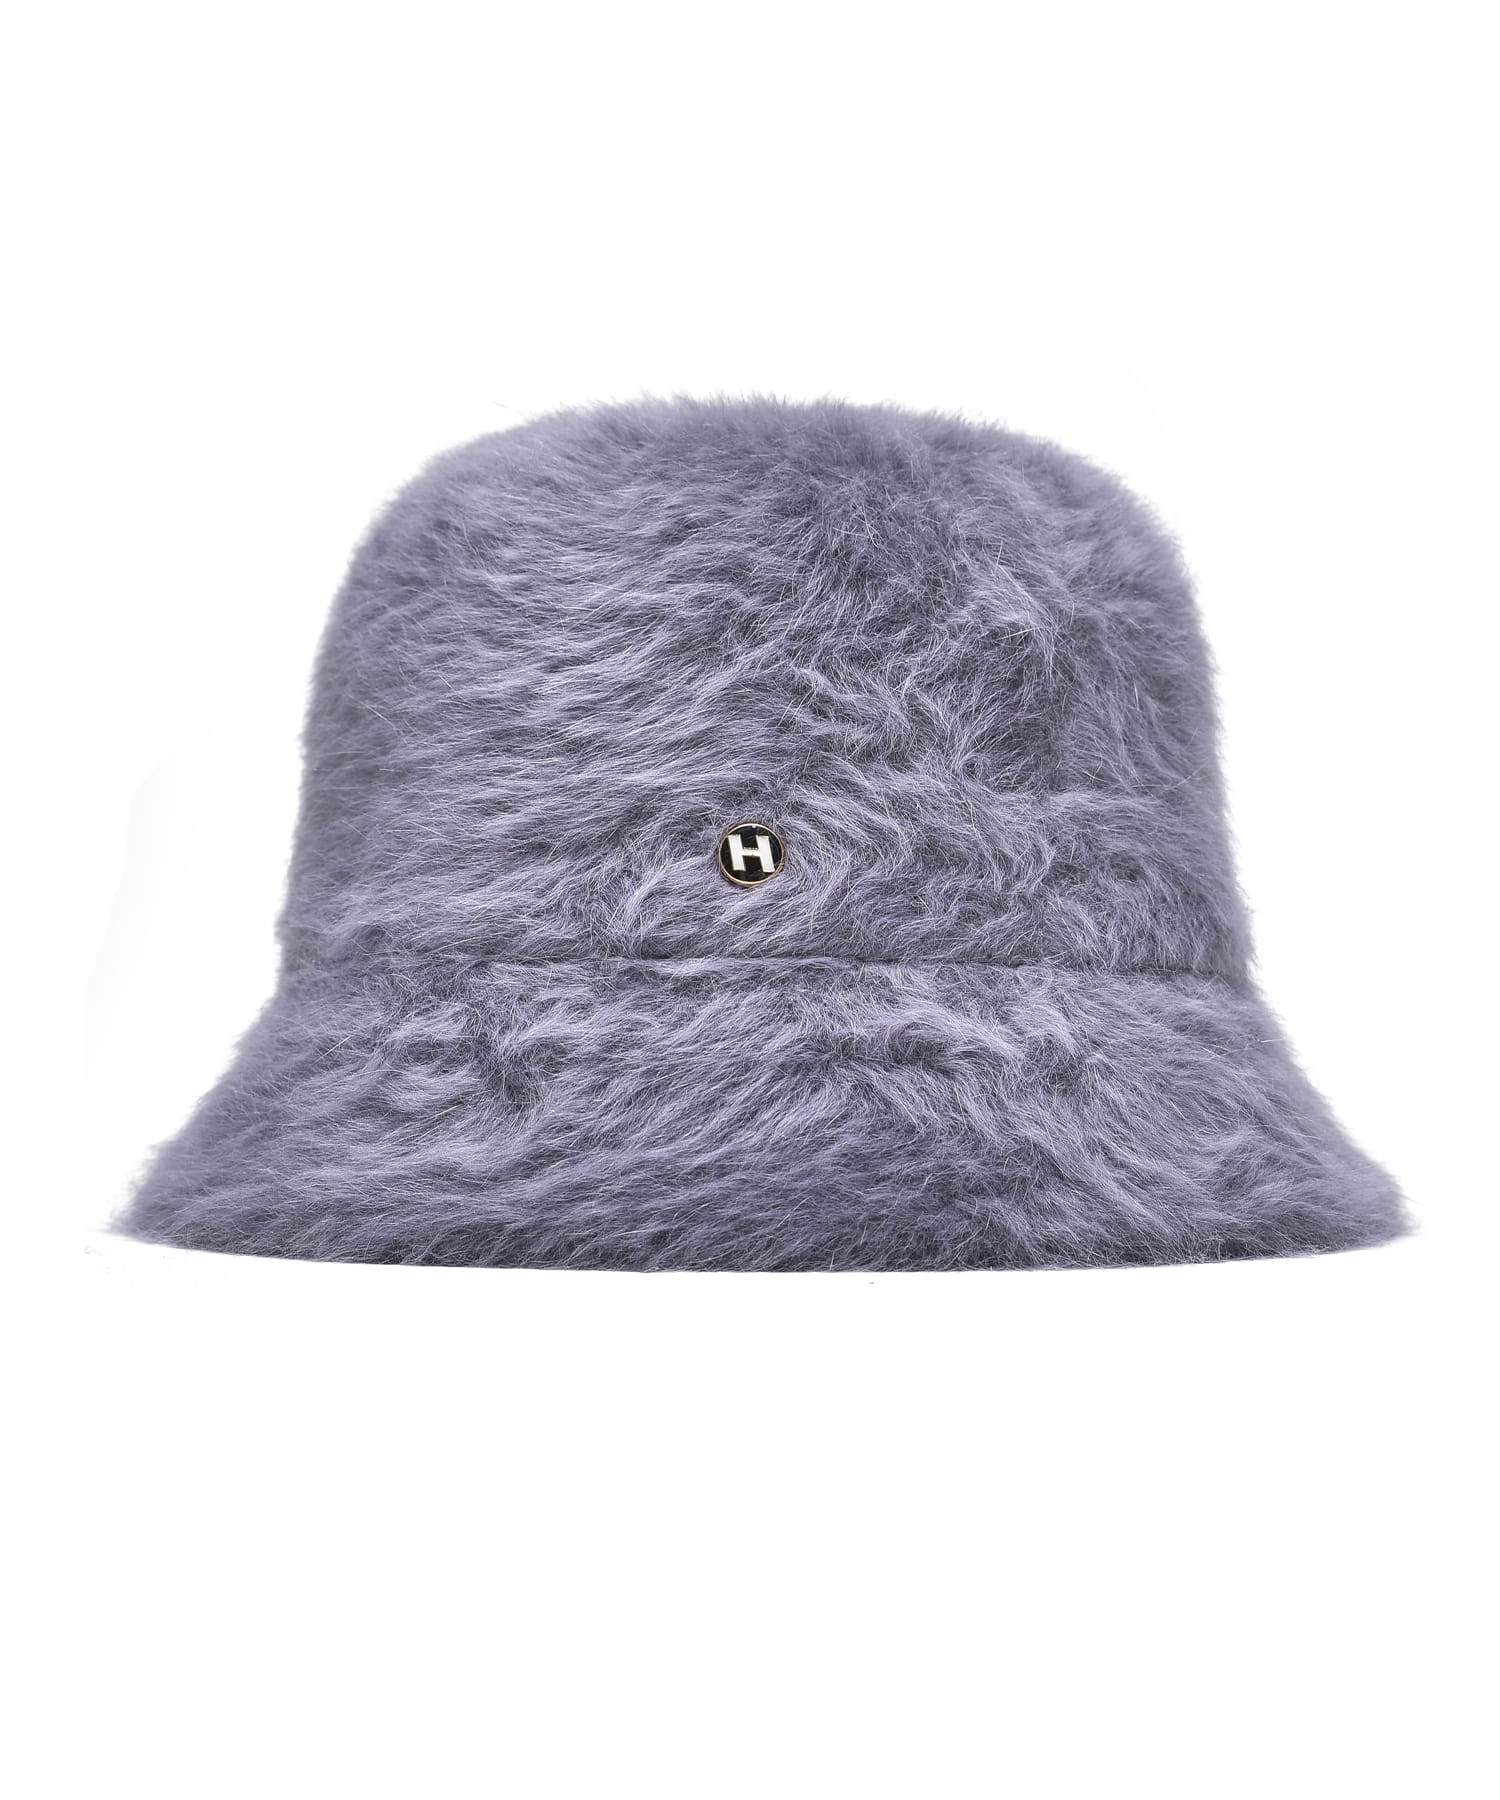 H fur bucket hat_gray